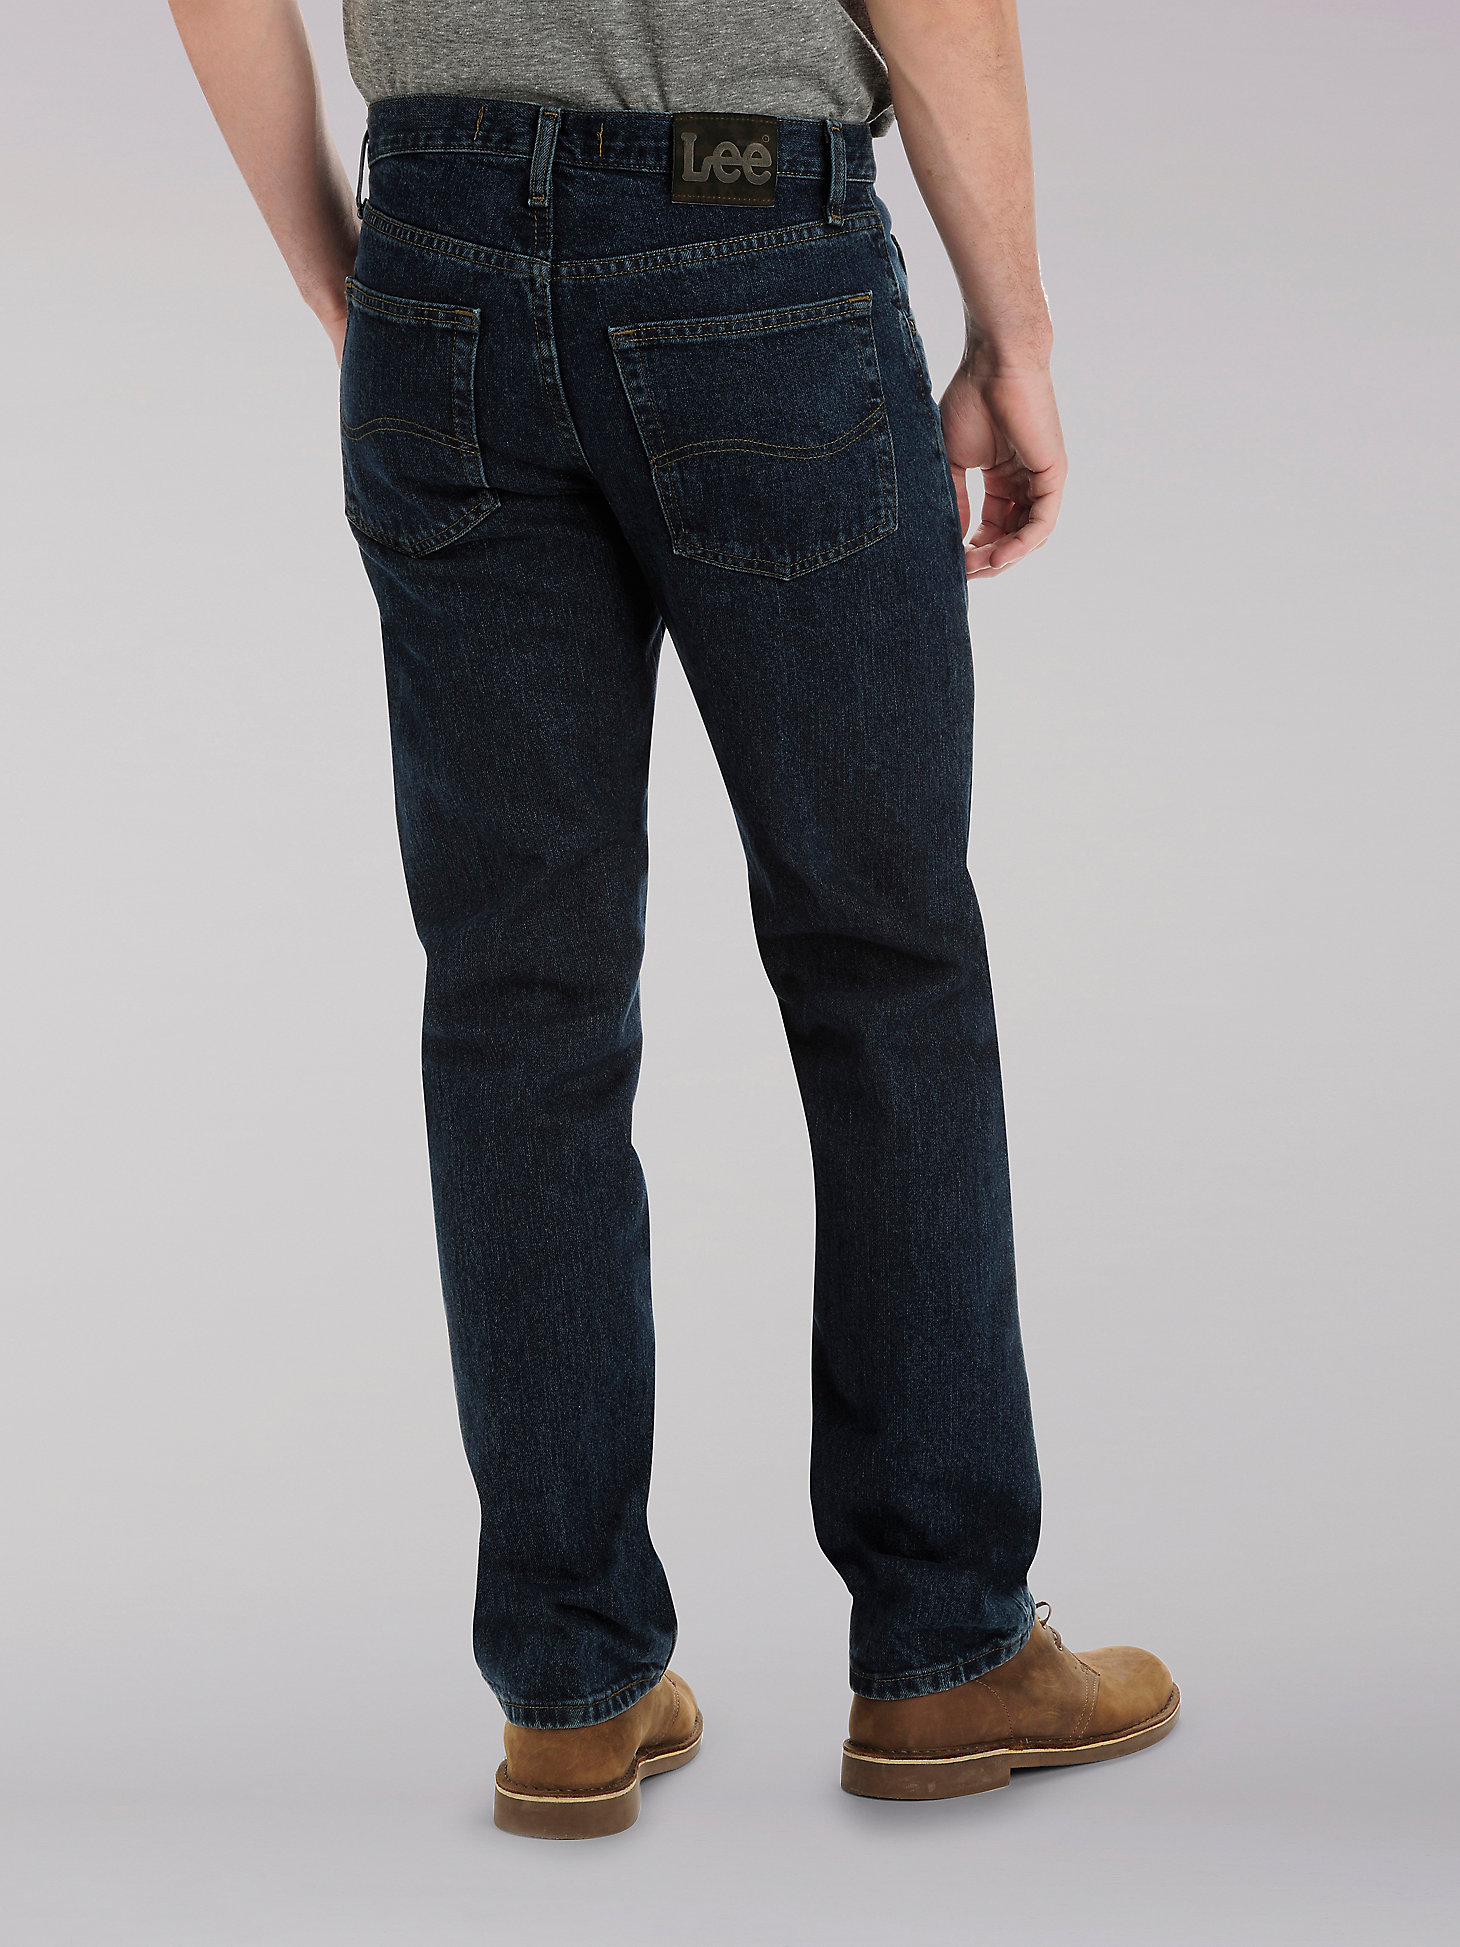 Mens Lee Daren X-Long 36 Inch leg Regular Slim Fit Jeans AA36 Indigo Blue 